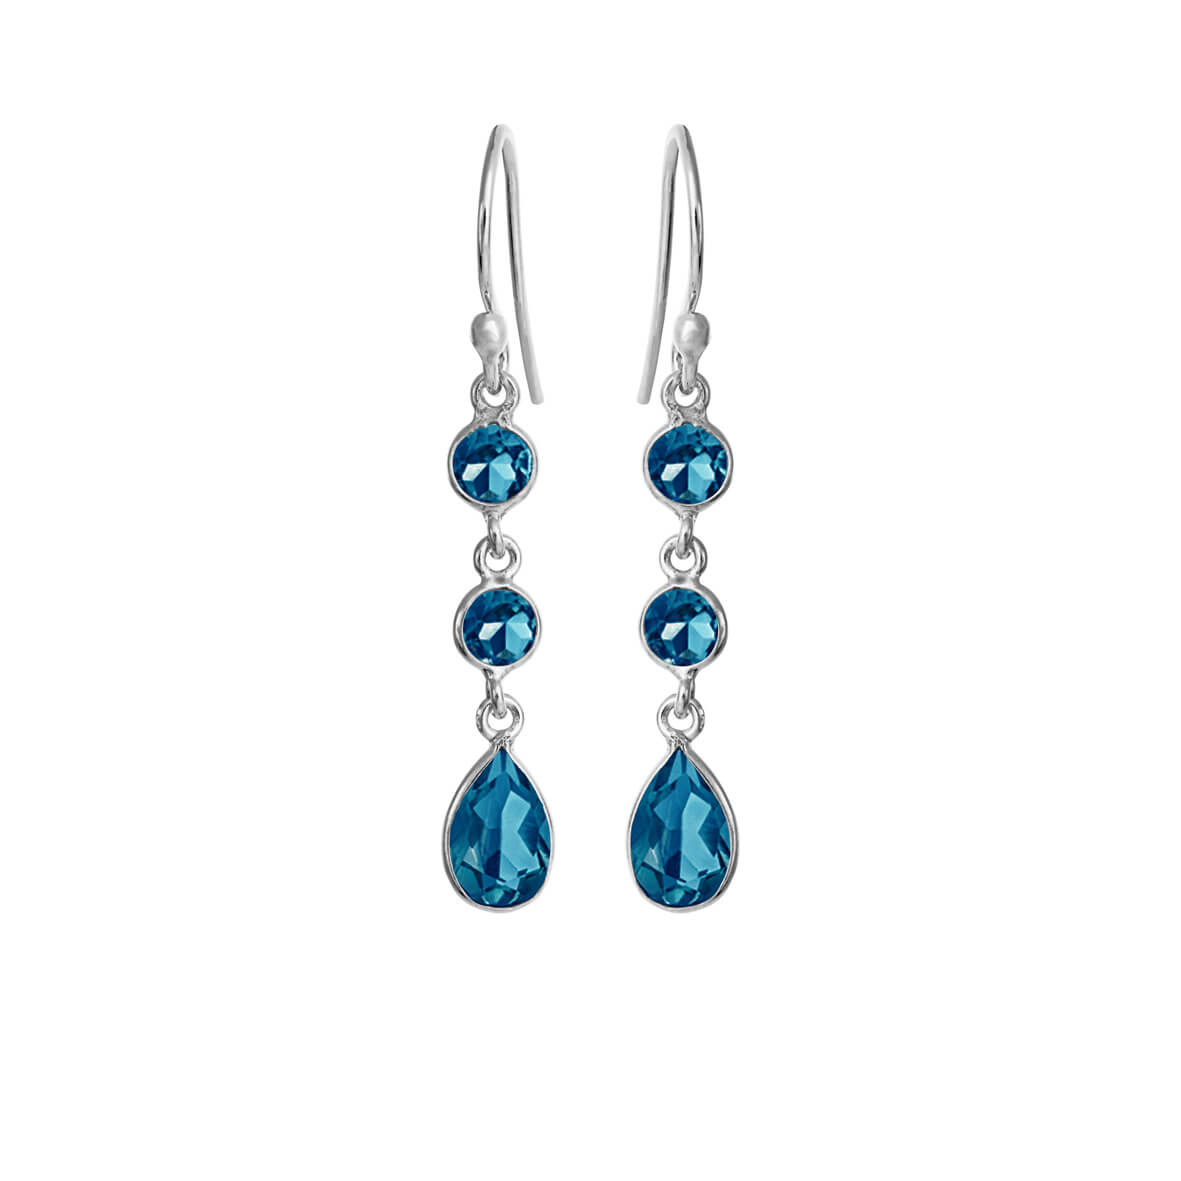 Earrings in silver with london blue crystal - Susanne Friis Bjørner ...